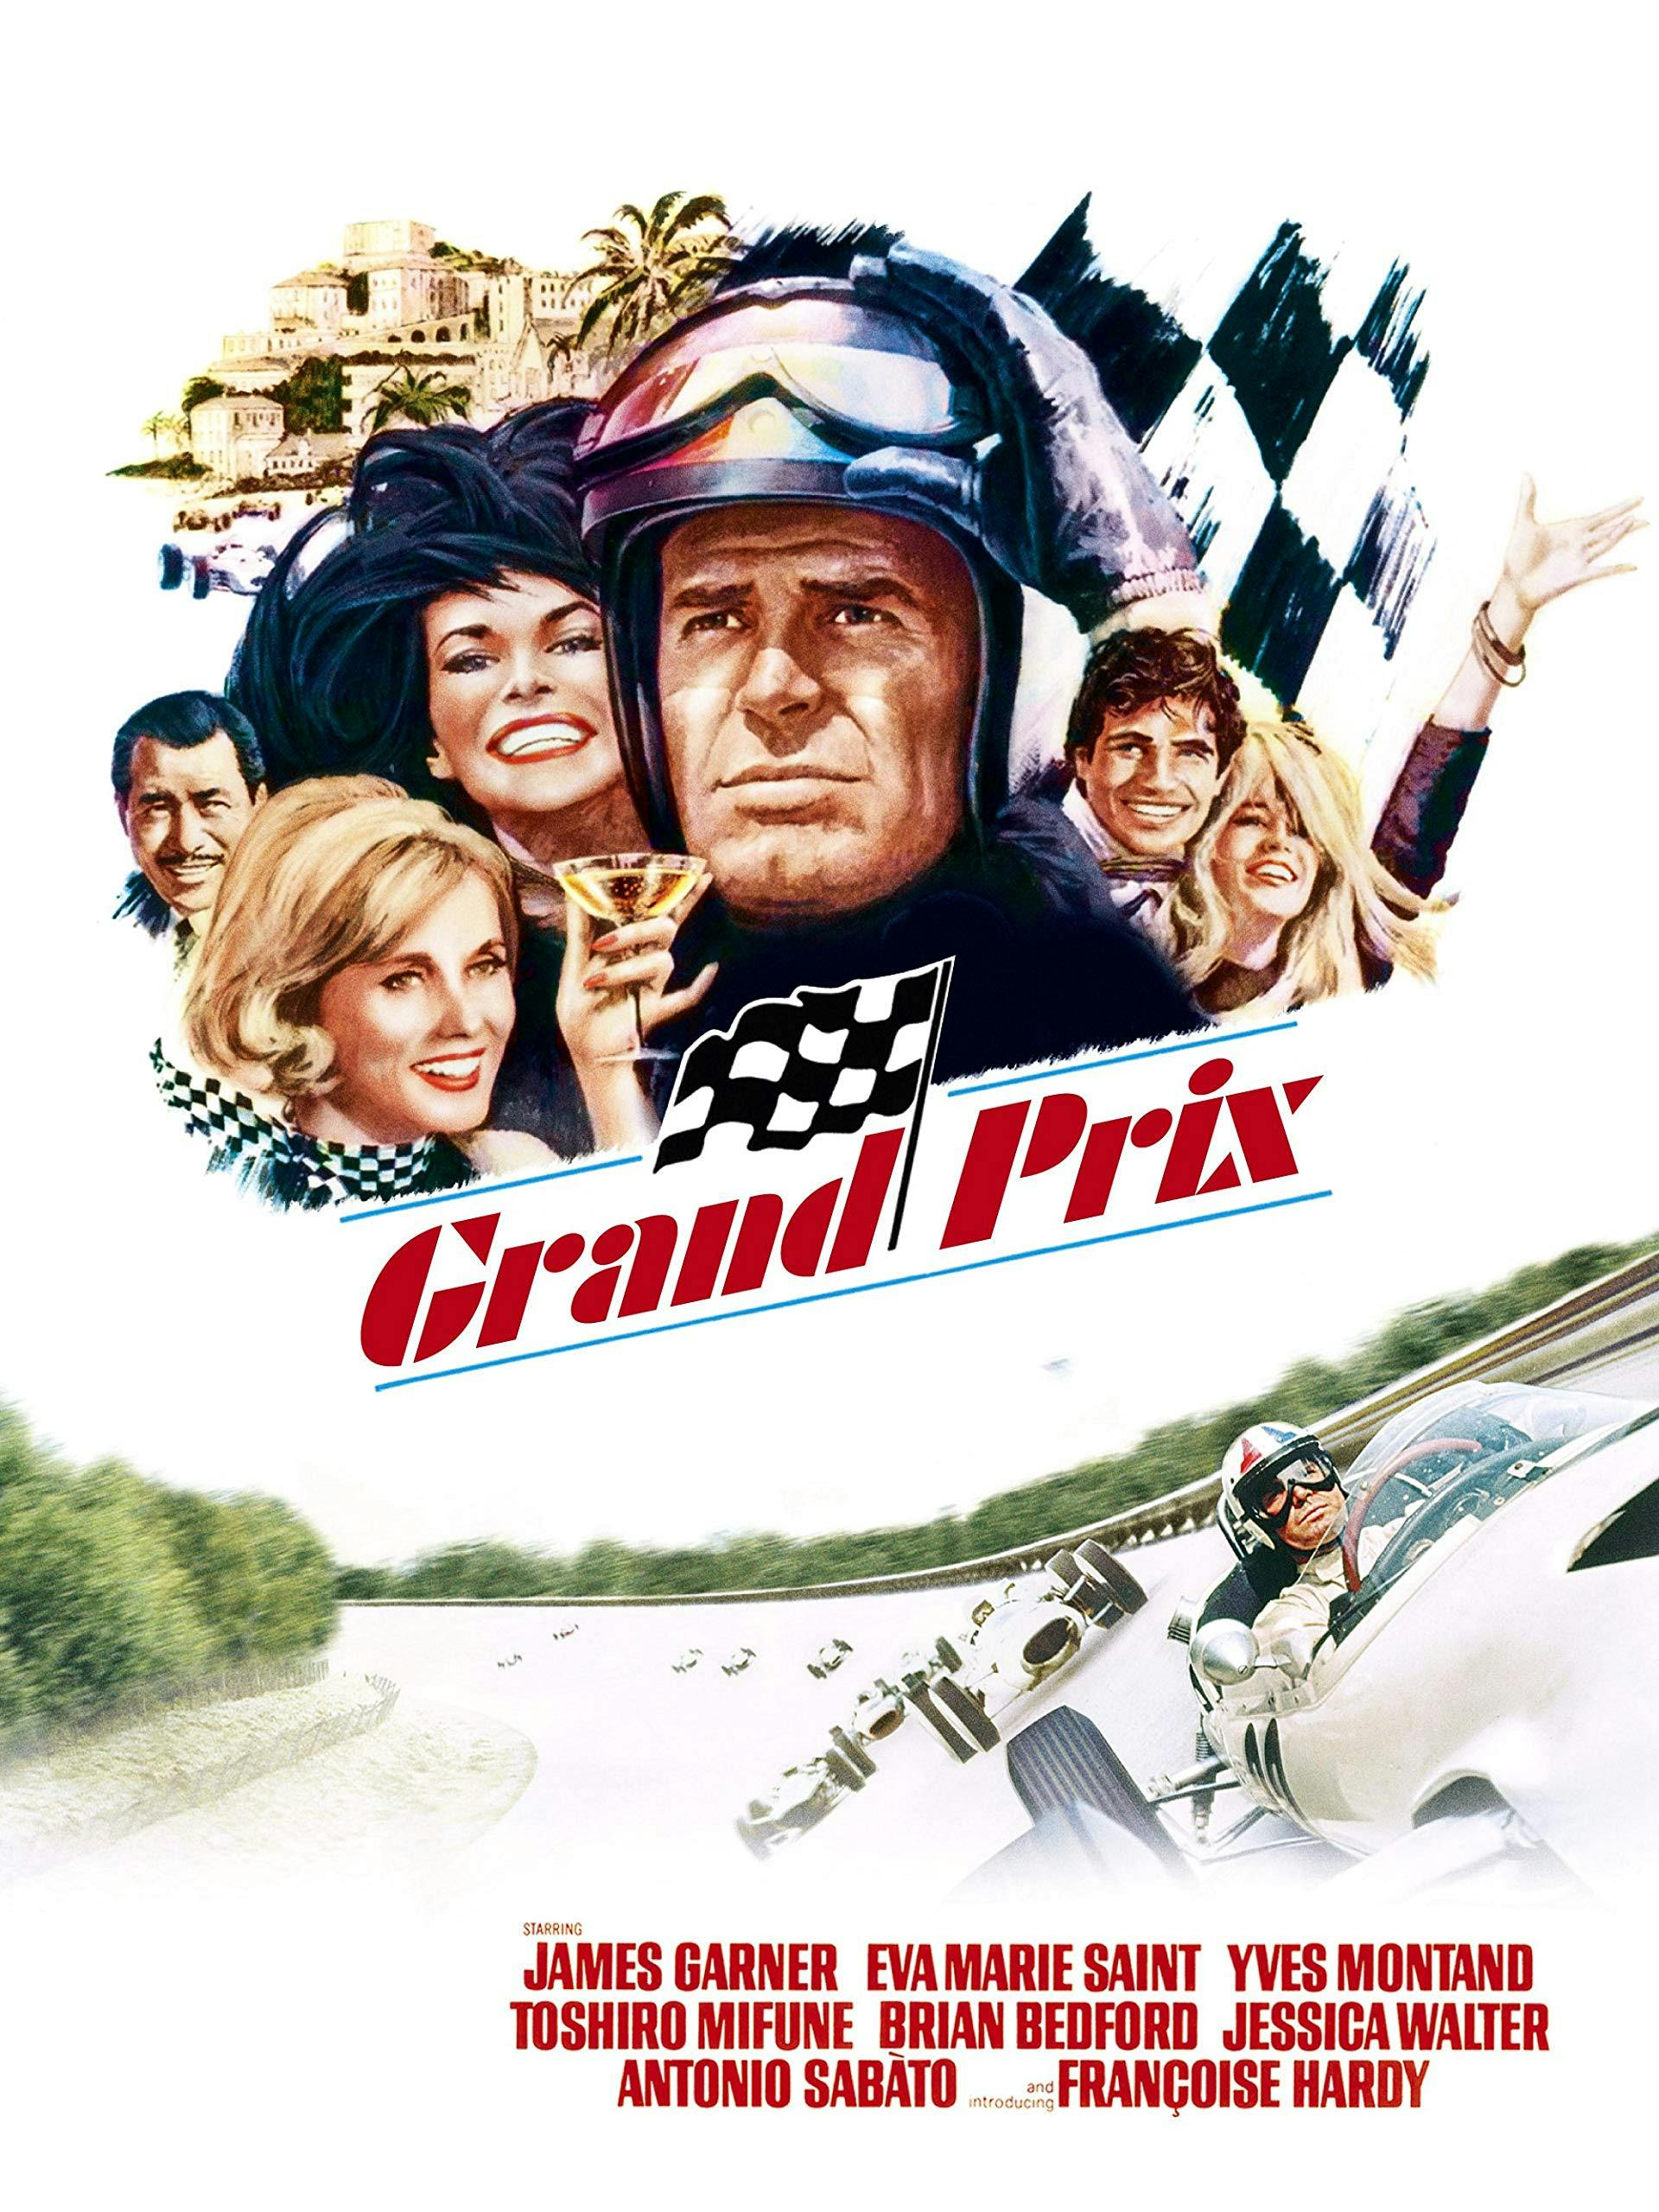 Grand Prix Movie Motion Picture Poster Starring James Garner